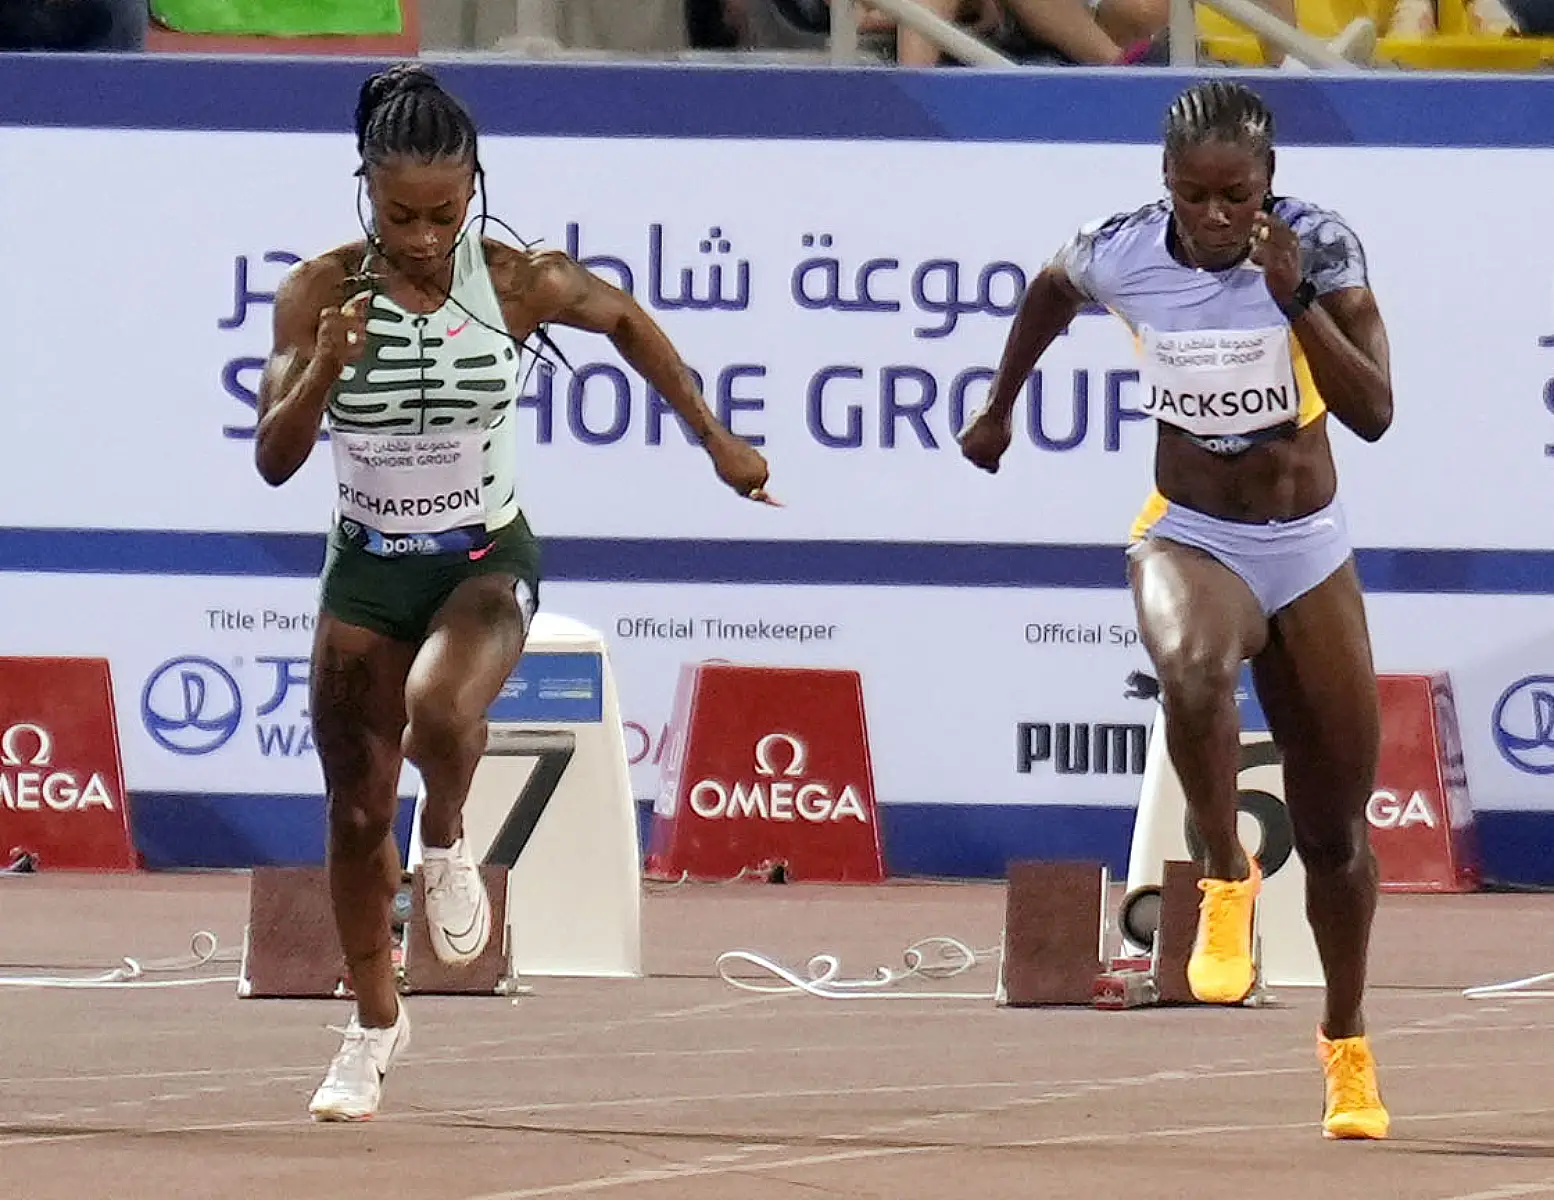 Sha'Carri Richardson and Shericka Jackson competes in the 100m dash at the Doha Diamond League meeting